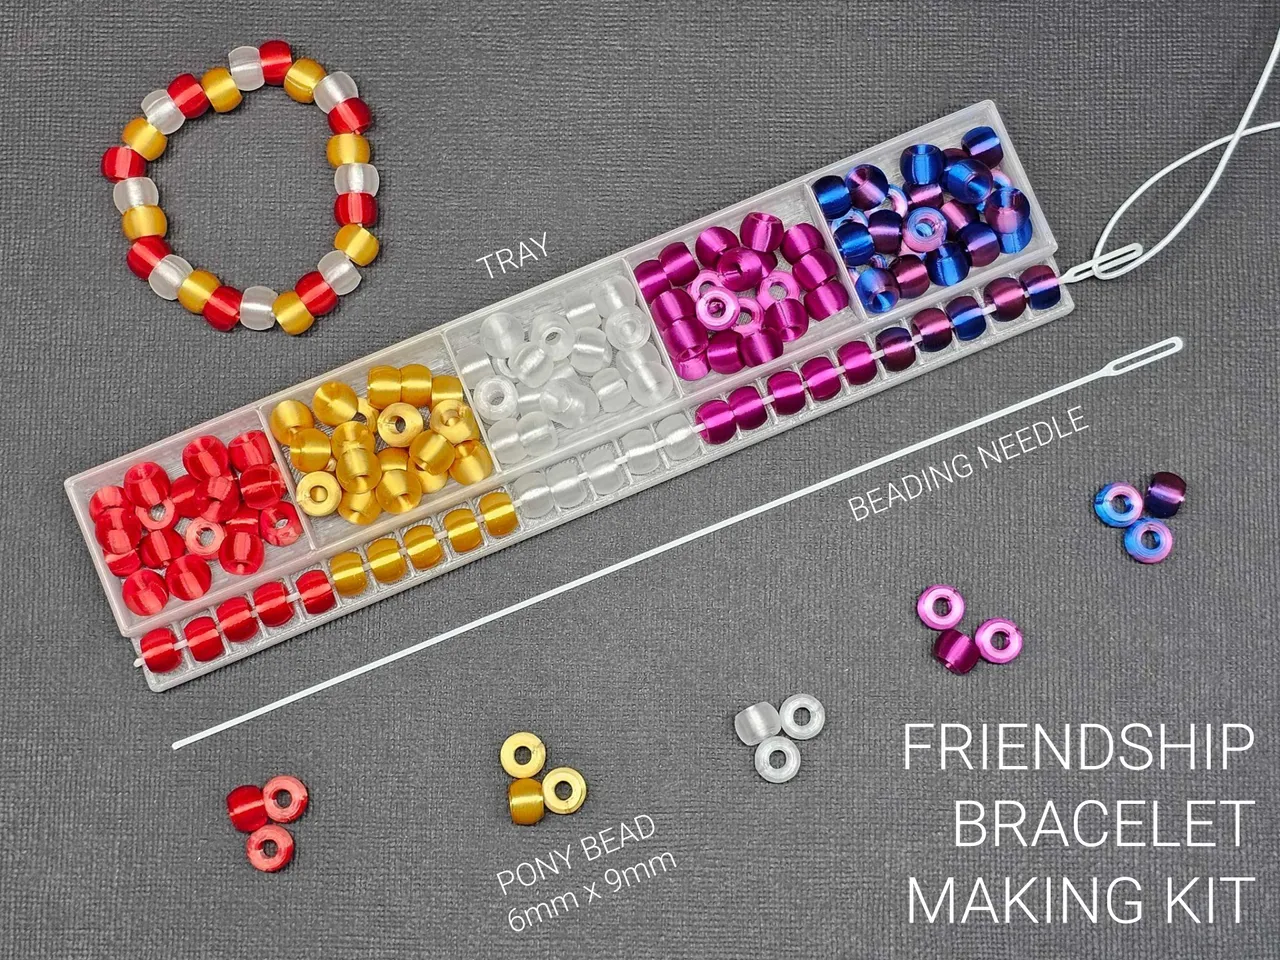 Friendship Bracelet Making Kit by Karen Chau Designs